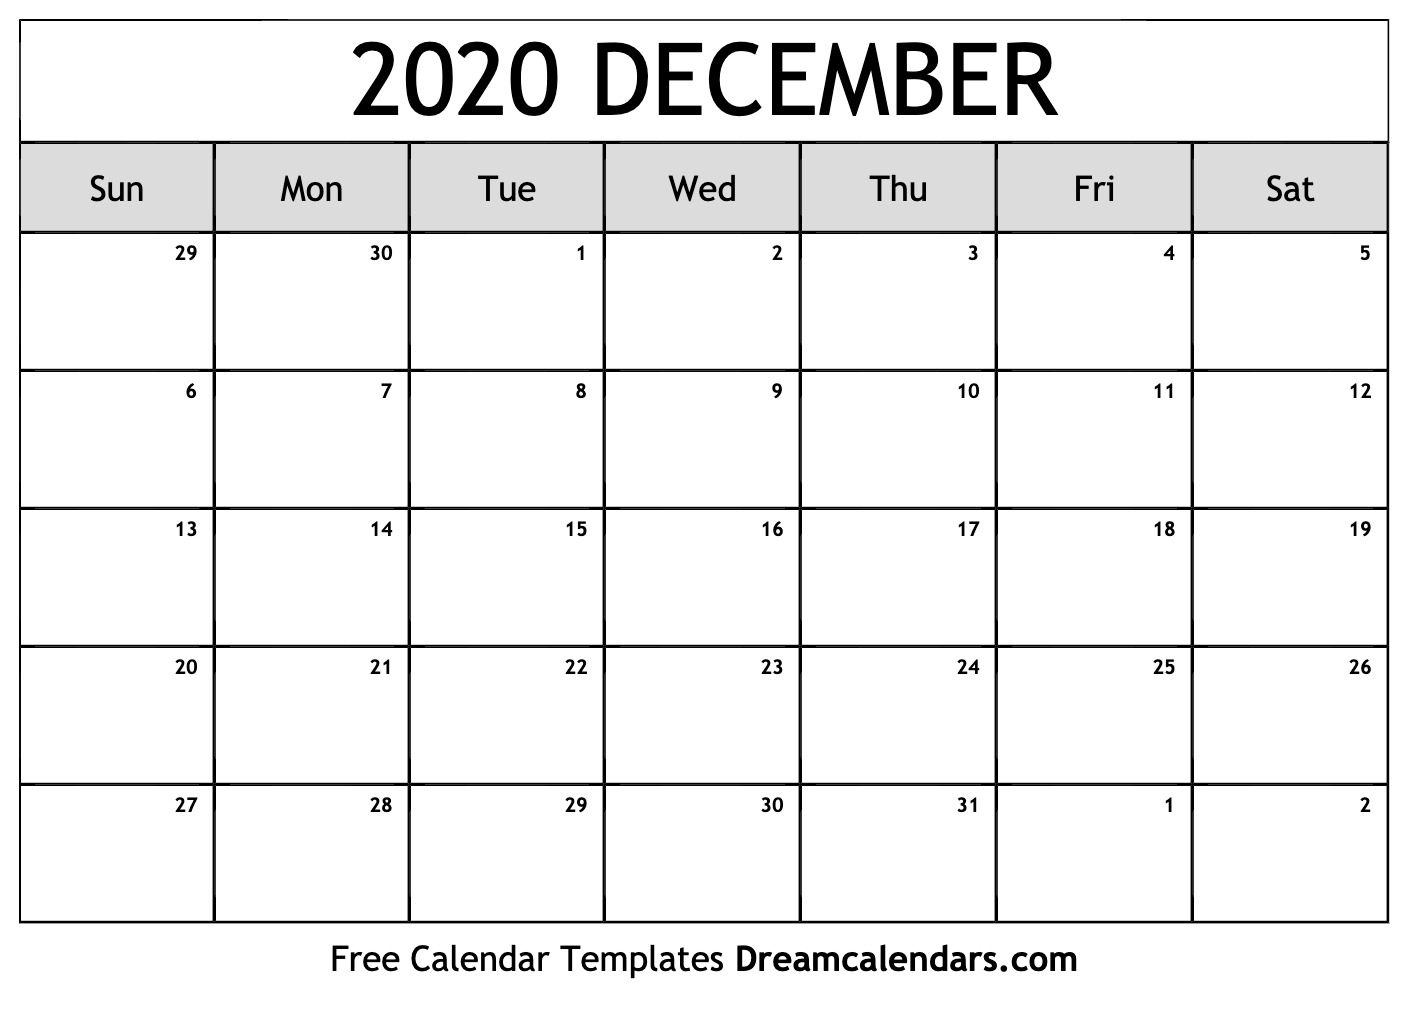 Downloadable Calendar December 2020 - Wpa.wpart.co